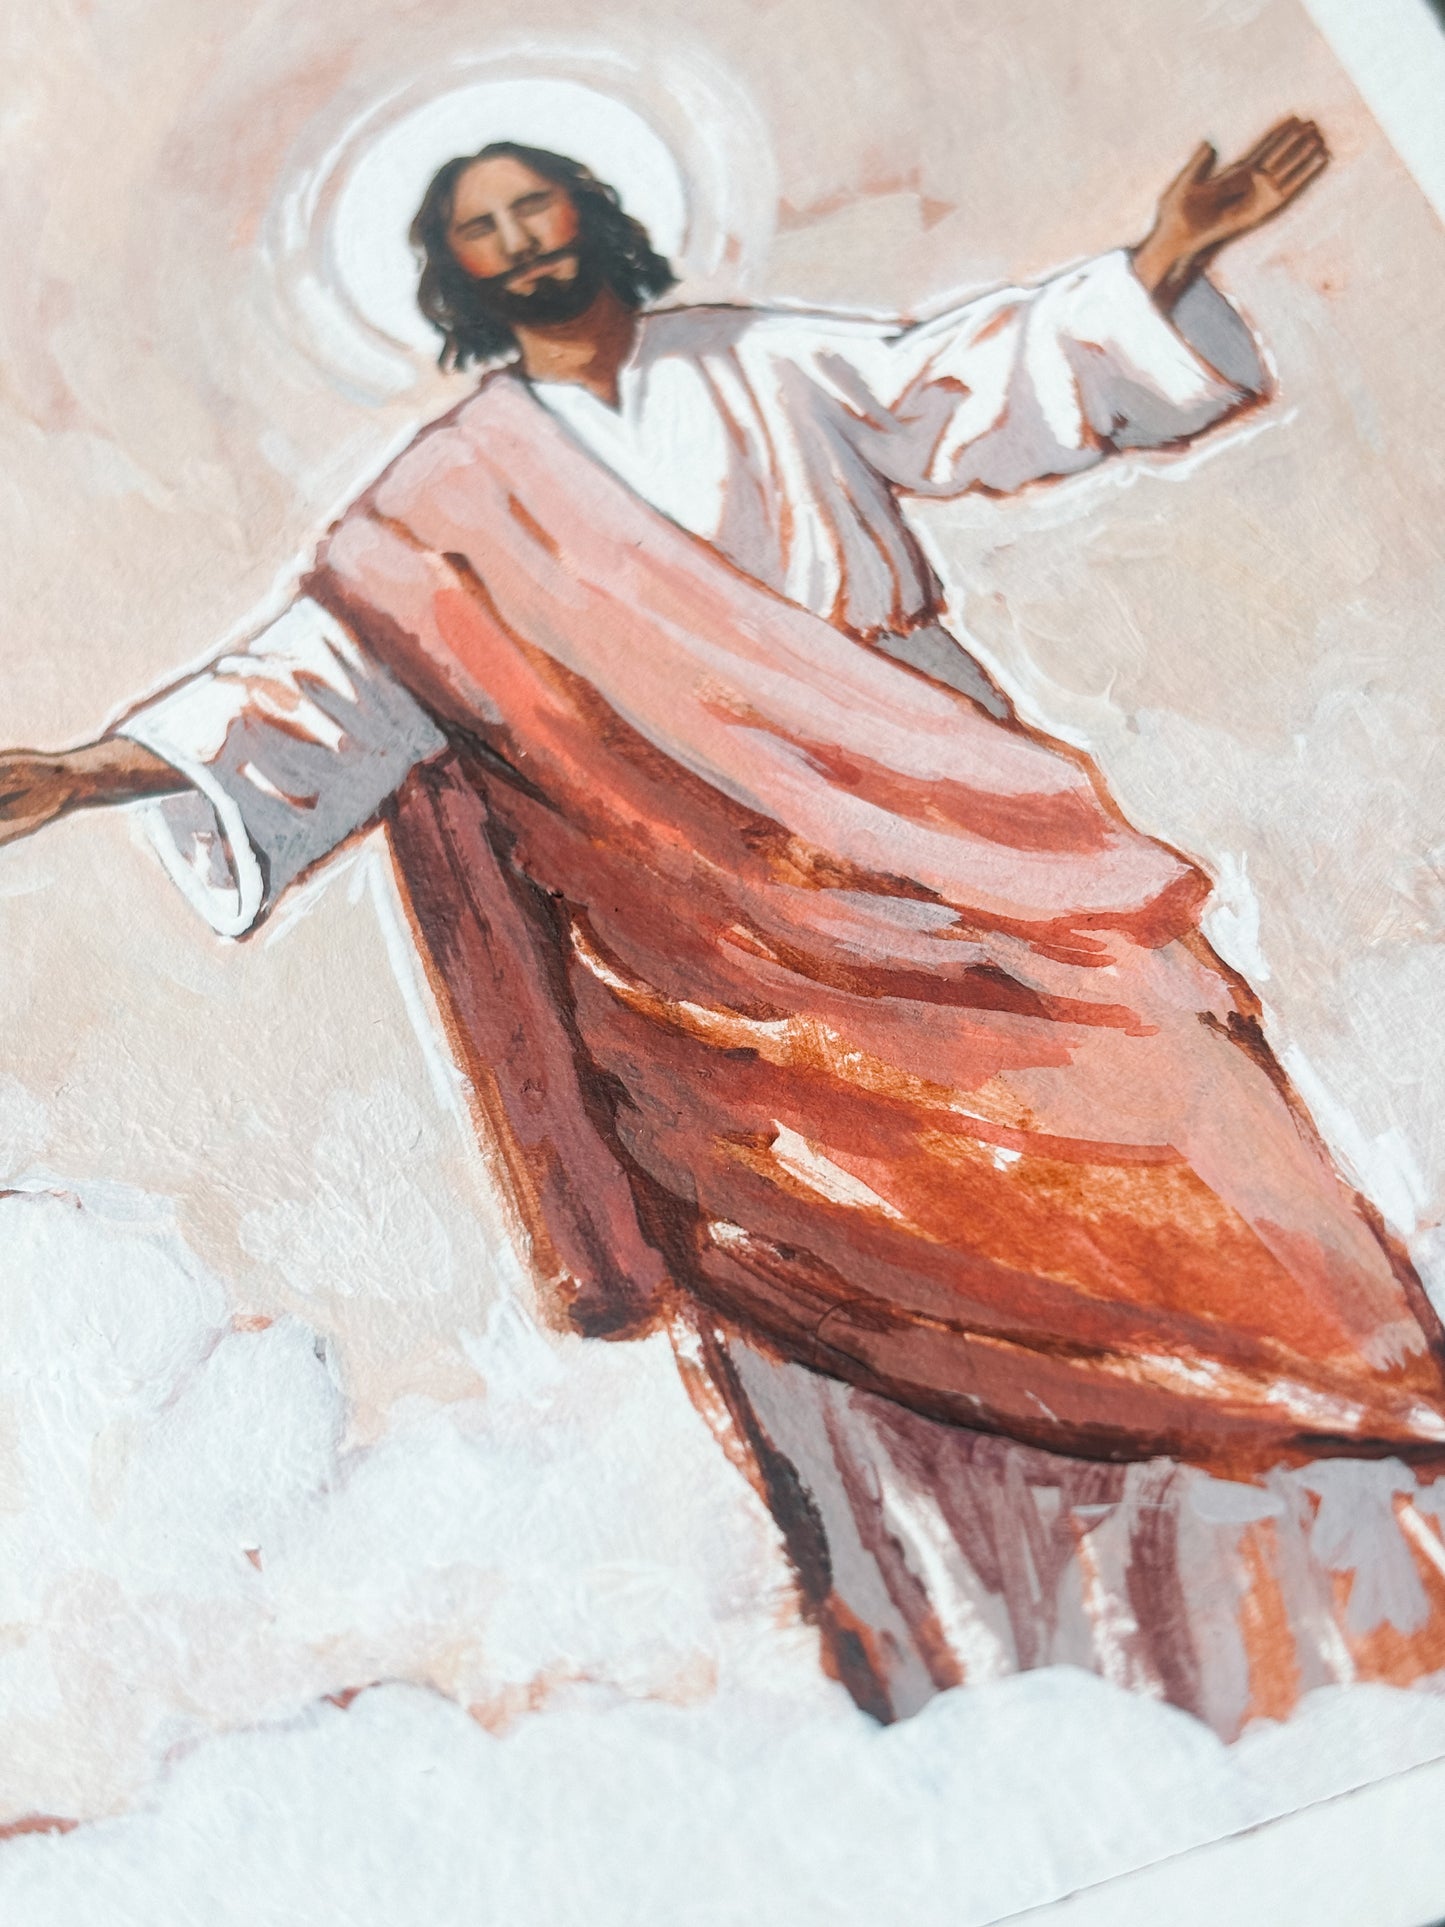 'My Redeemer Lives' 5x7 inch original painting